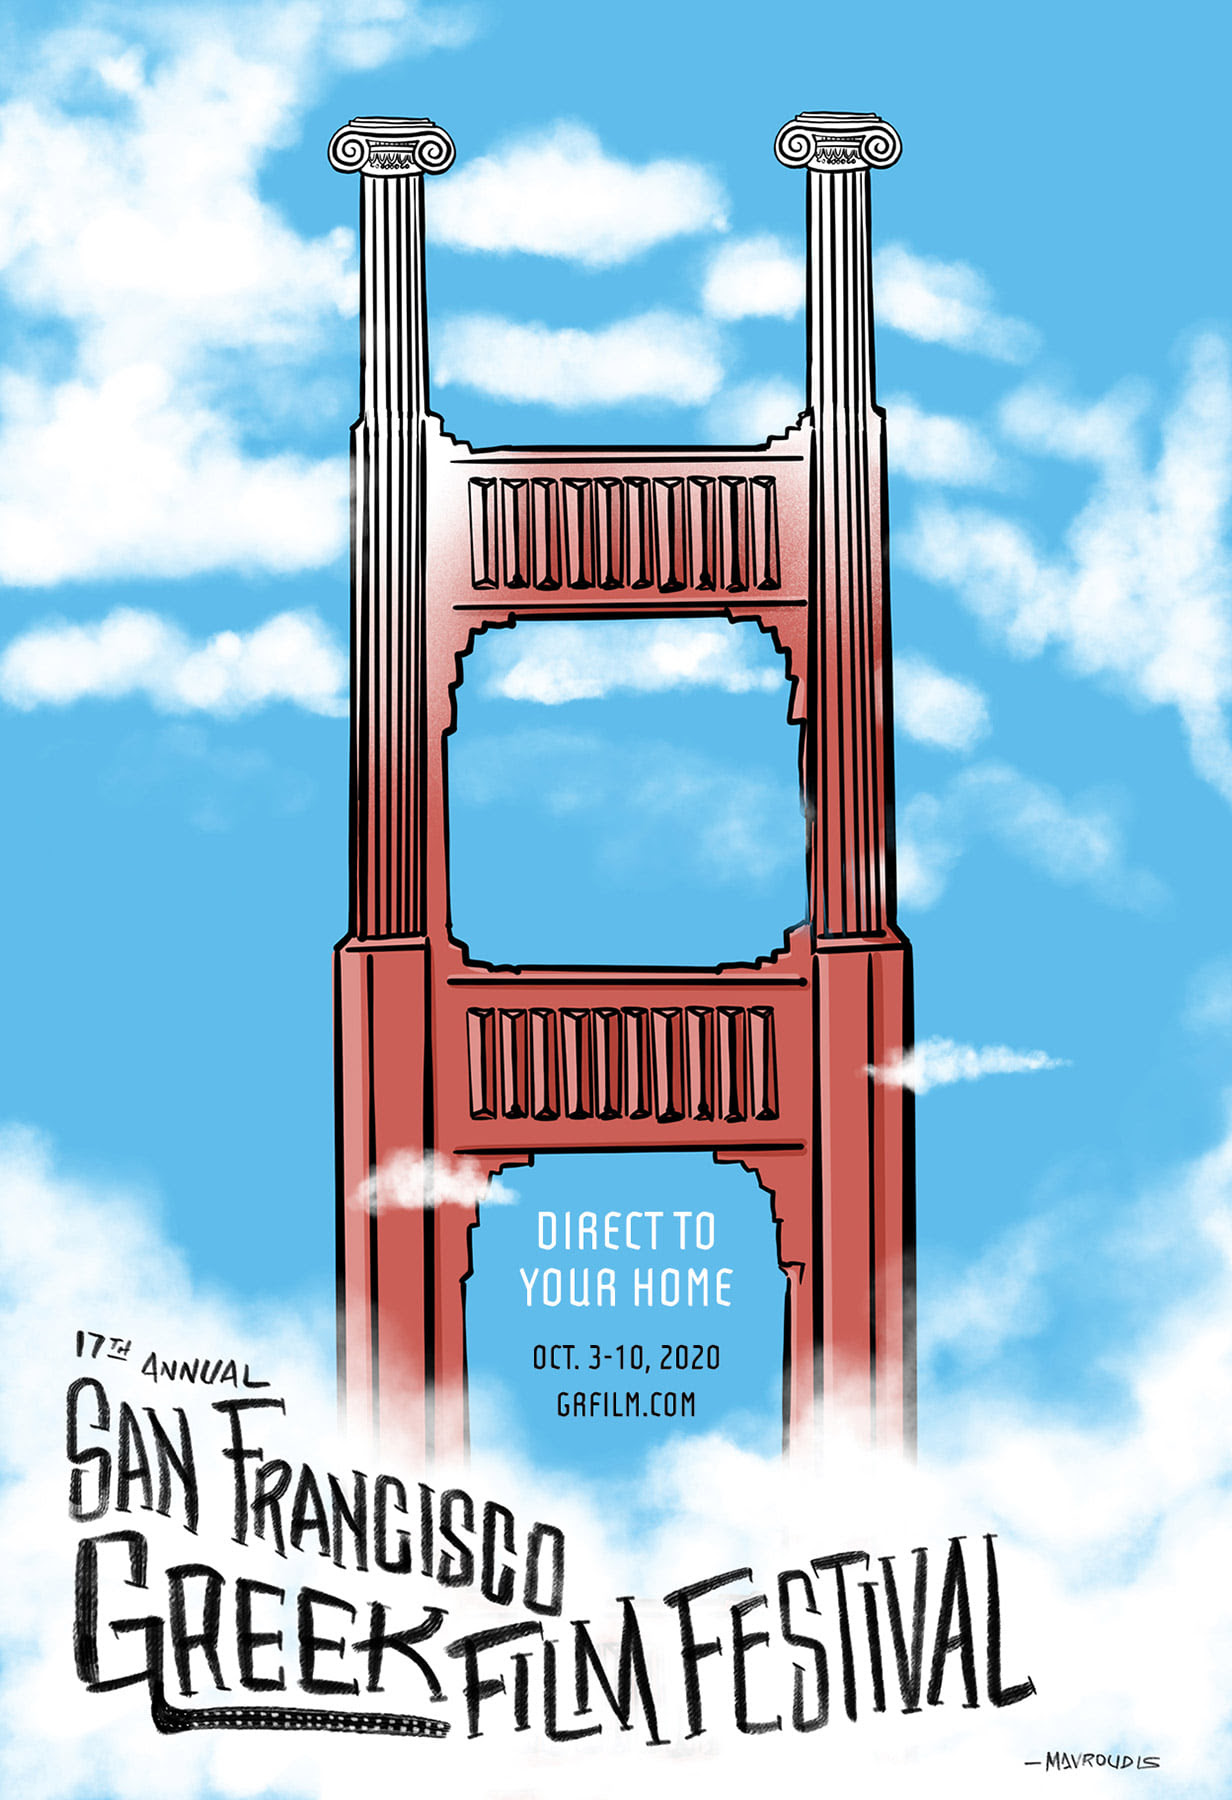 San Francisco Greek Film Festival at Online in San Francisco October